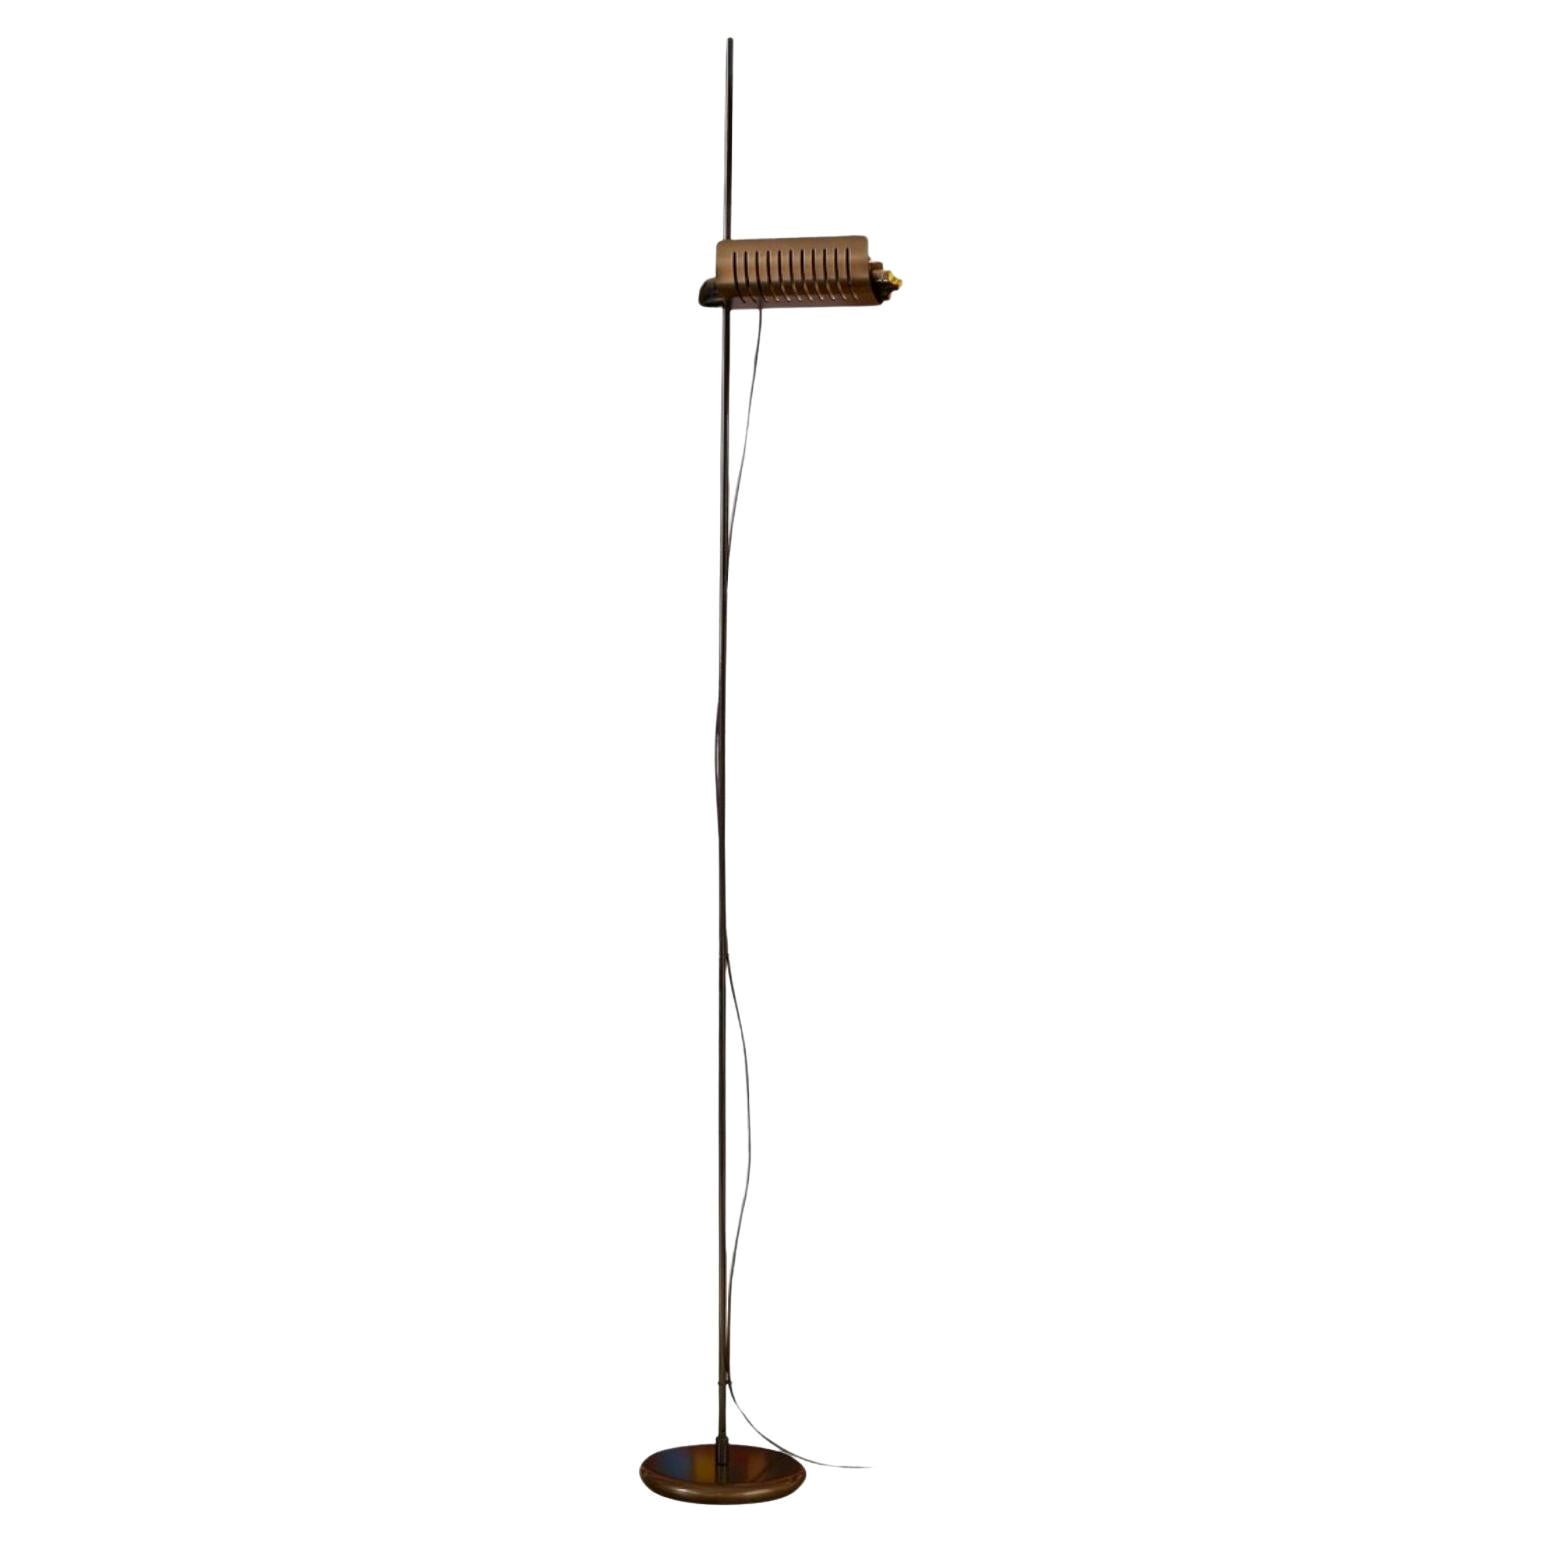 Joe Colombo Model #626 'Colombo' Floor Lamp in Anodic Bronze and Black for Oluce